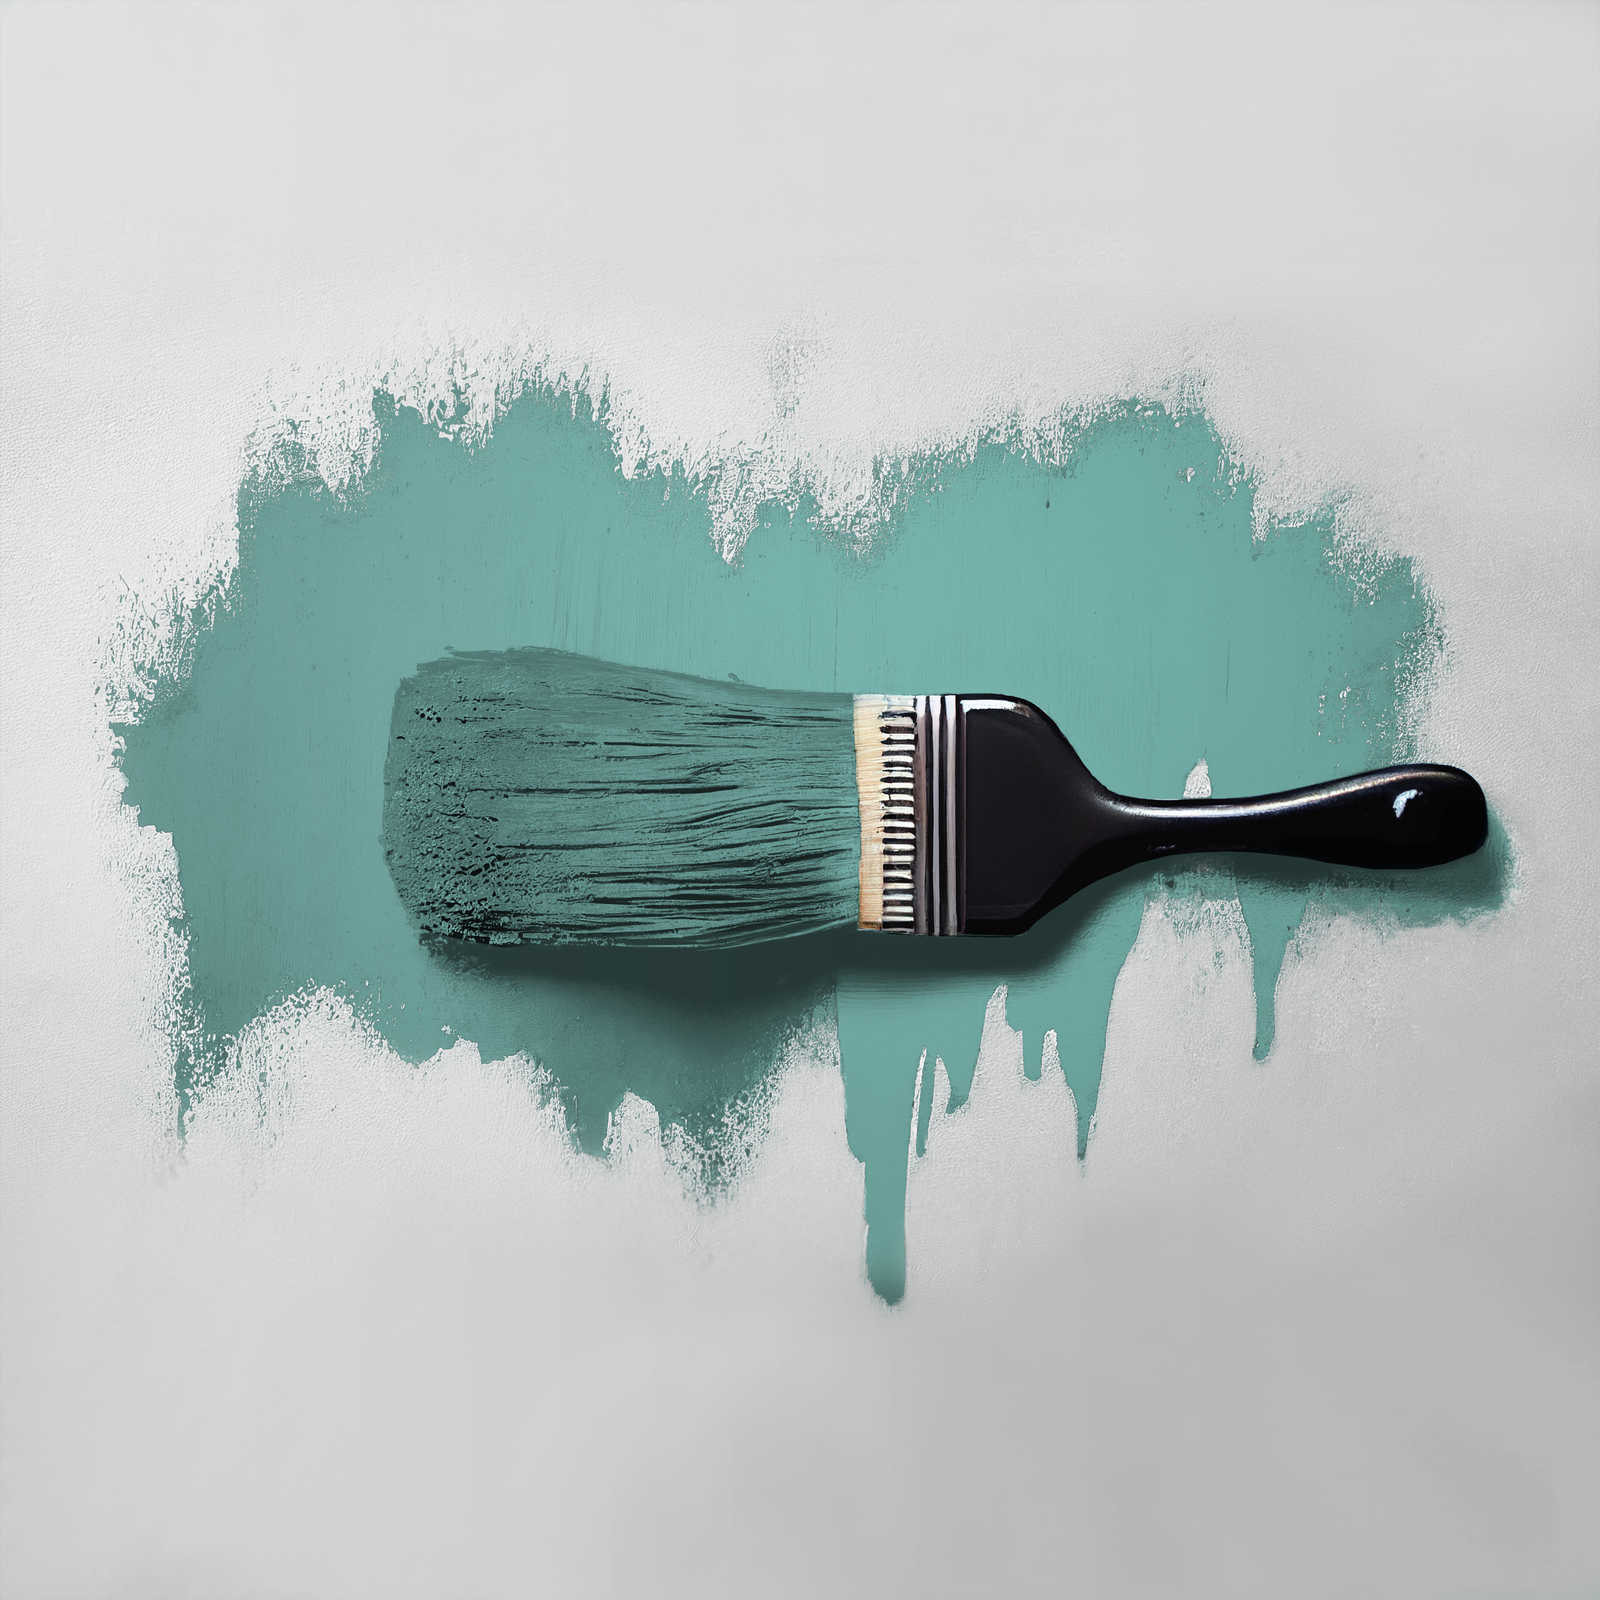             Pittura murale TCK3008 »Magical Mint« in petrolio chiaro – 2,5 litri
        